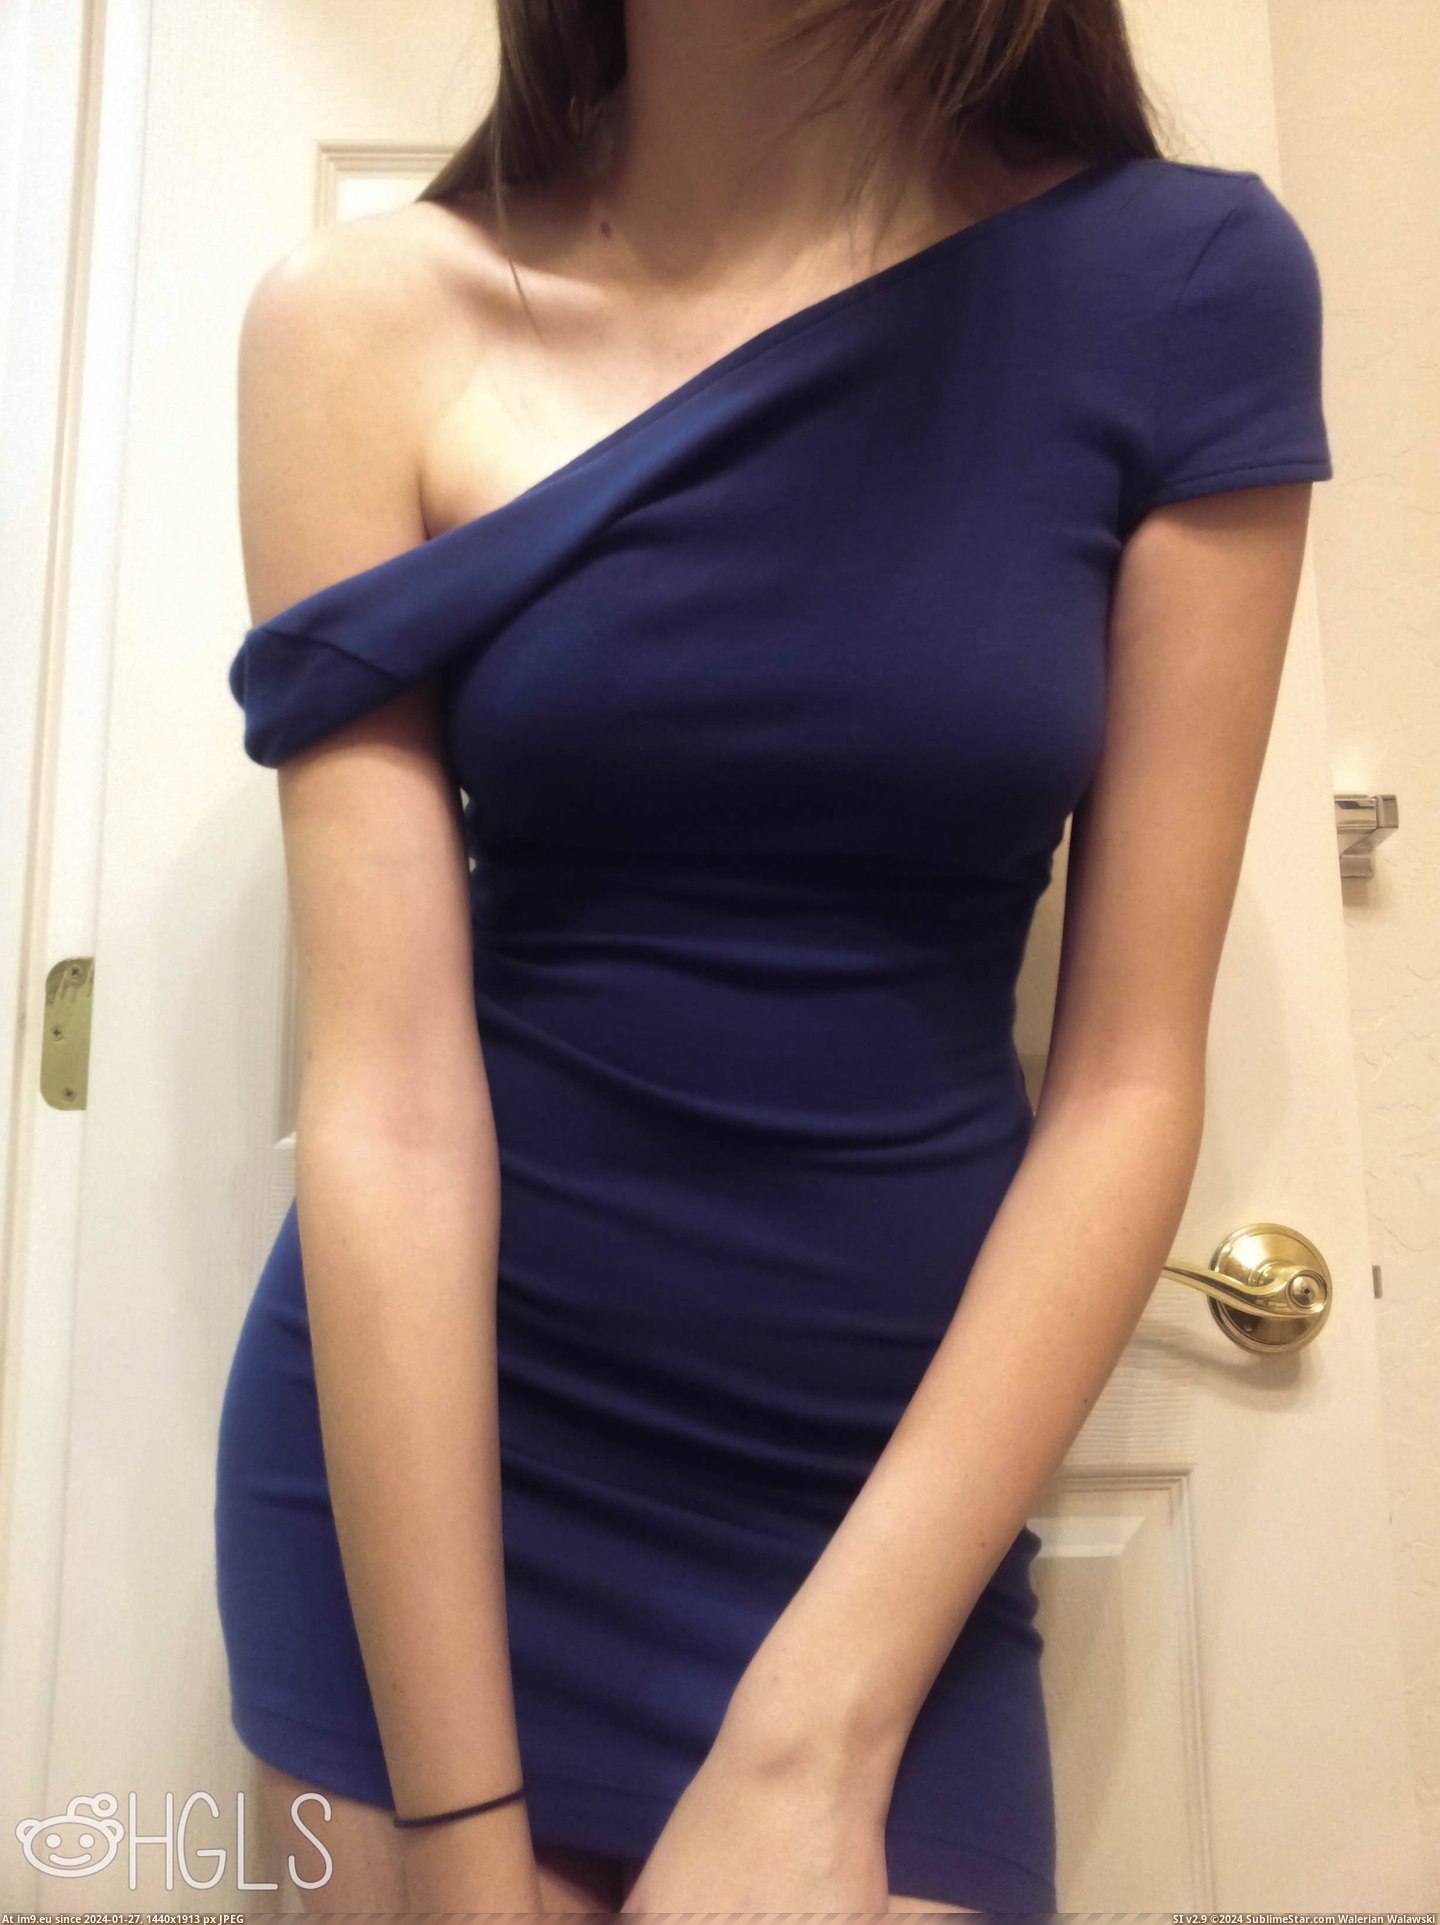 #New #Dress #Tight [Gonewild] like my new dress? it's a tight [f]it ;) 11 Pic. (Изображение из альбом My r/GONEWILD favs))